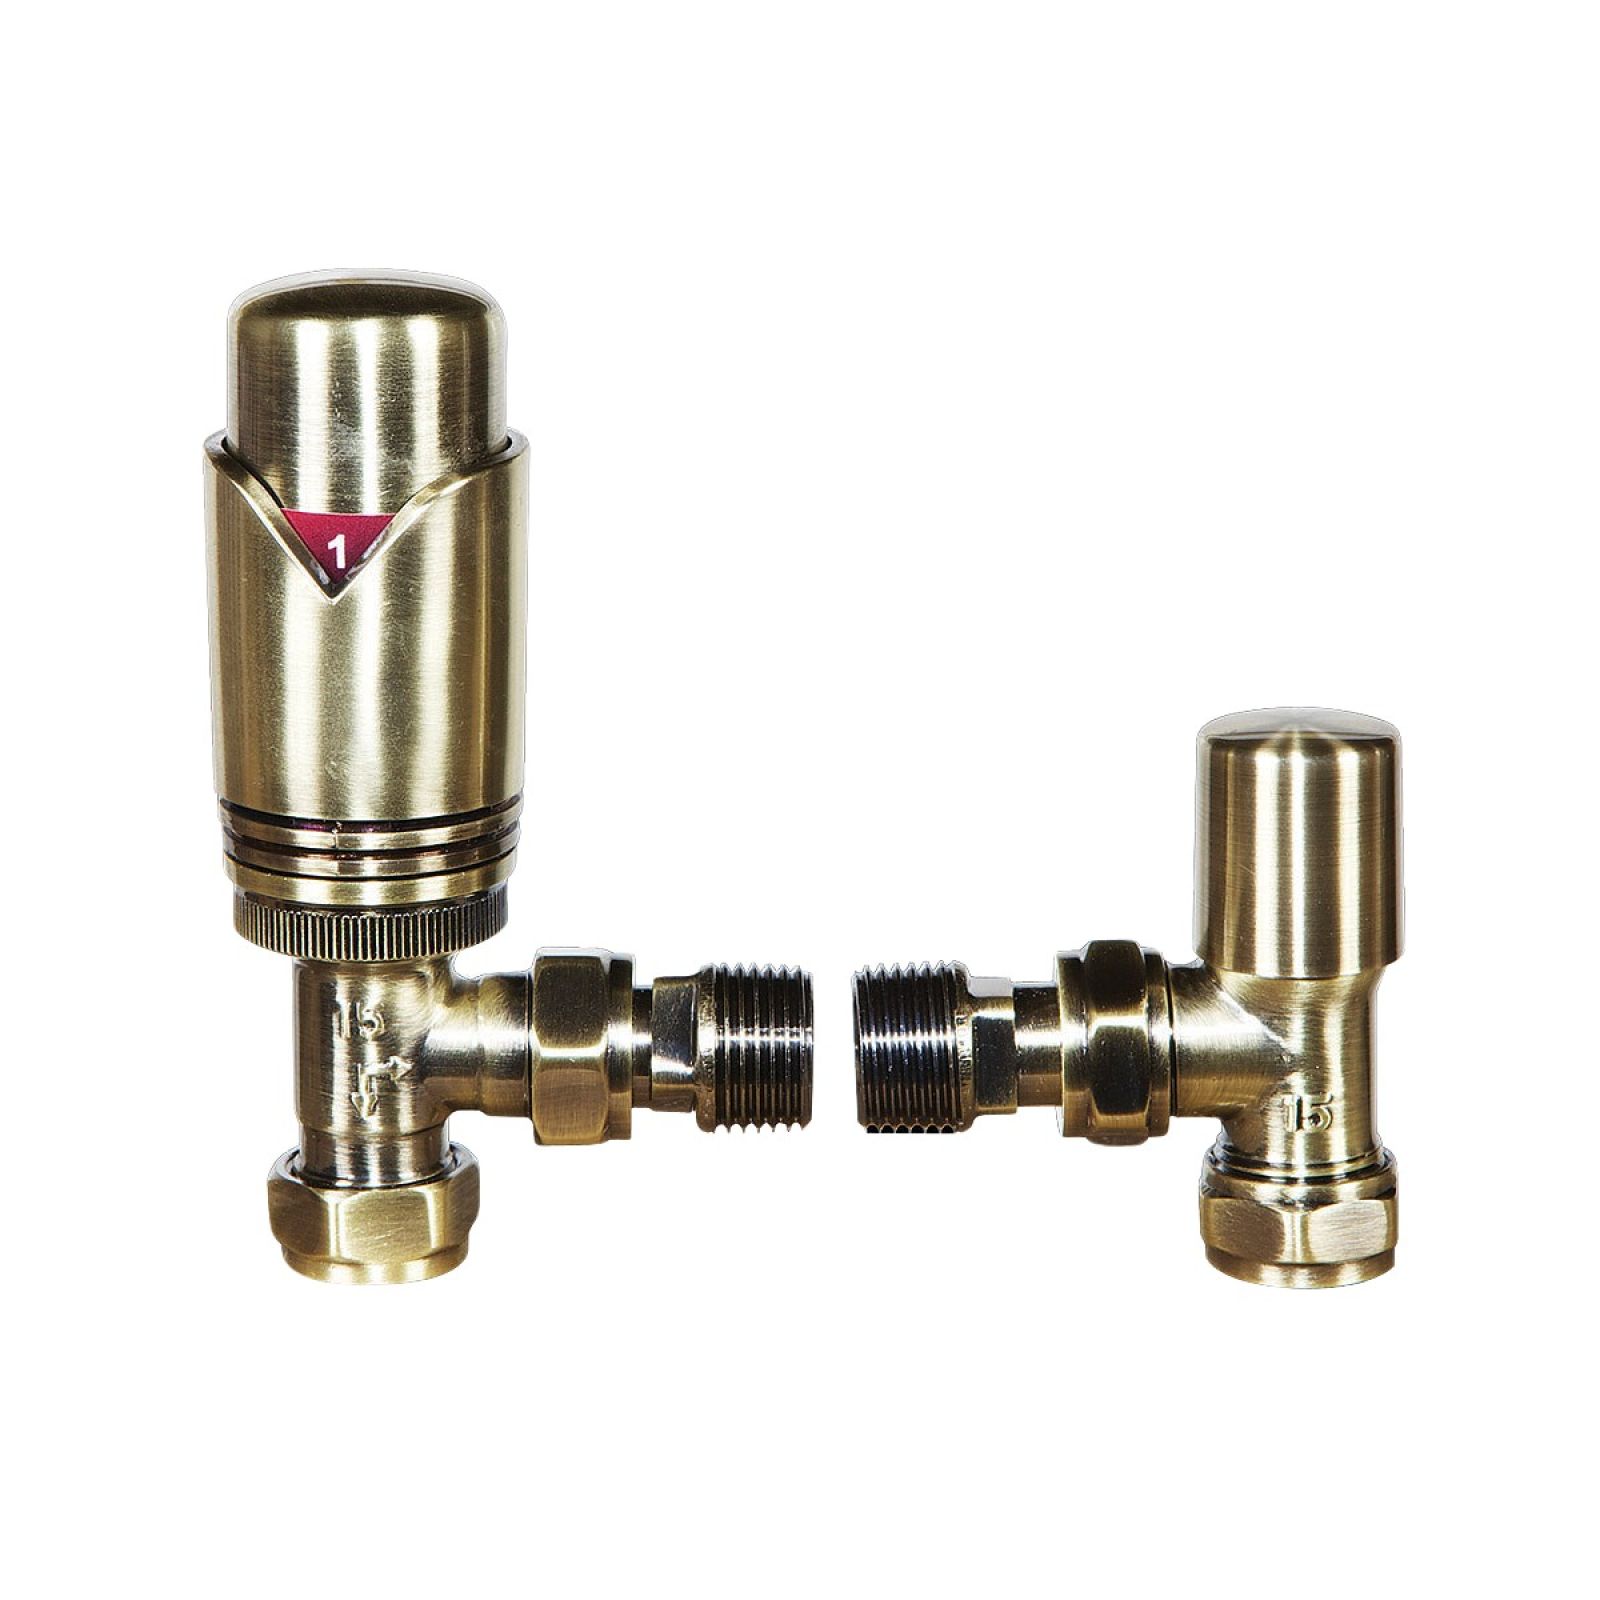 Westminster Radiator valve set - 1/2” or 3/4” connection